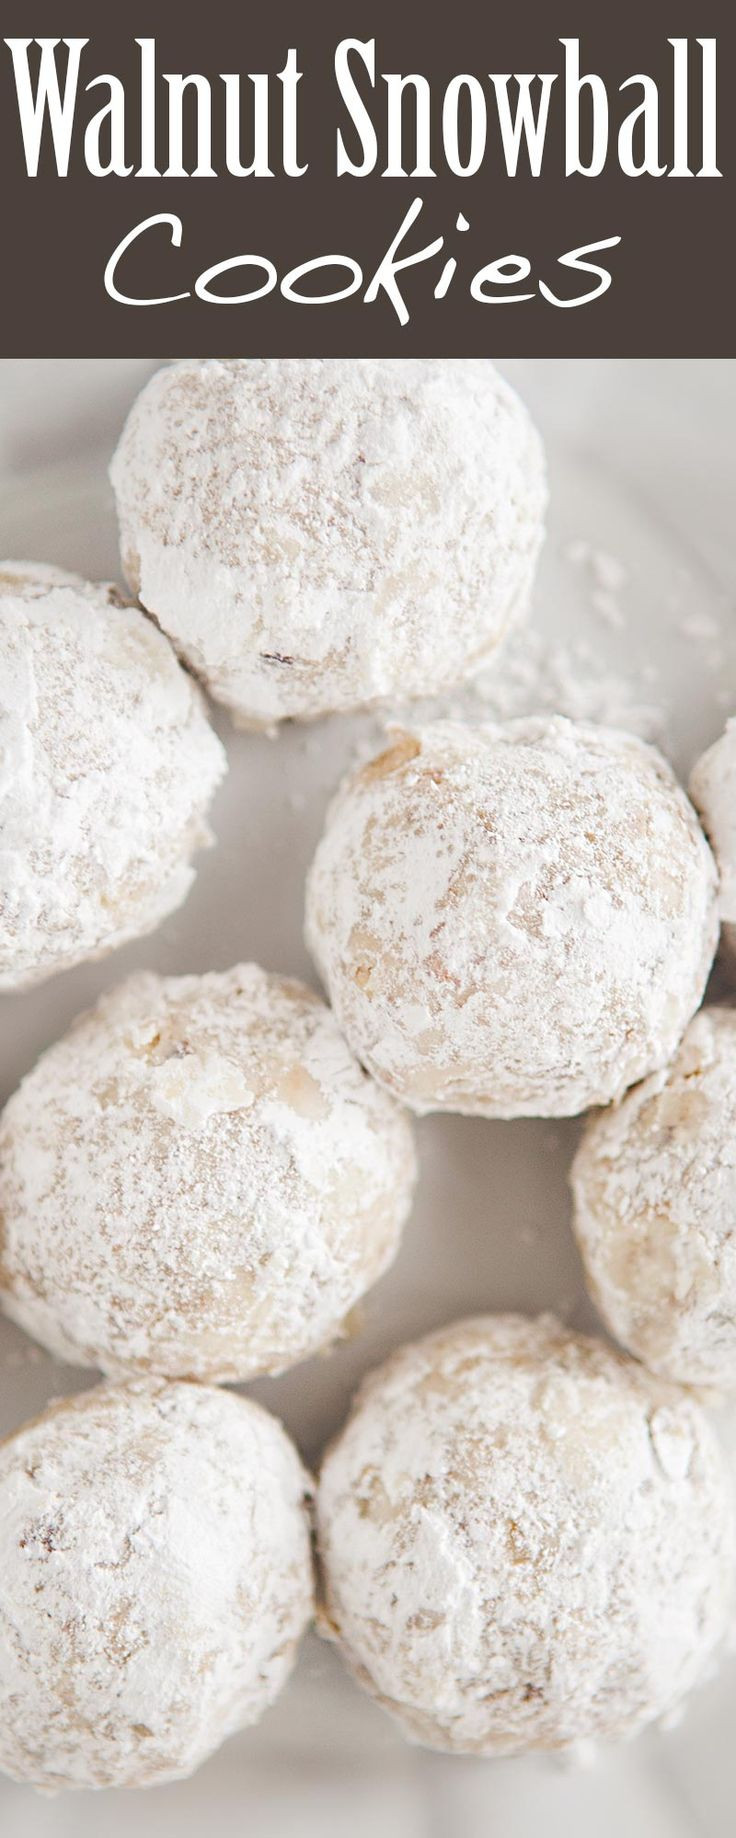 Christmas Ball Cookies Powdered Sugar
 Best 25 Powdered sugar ideas on Pinterest